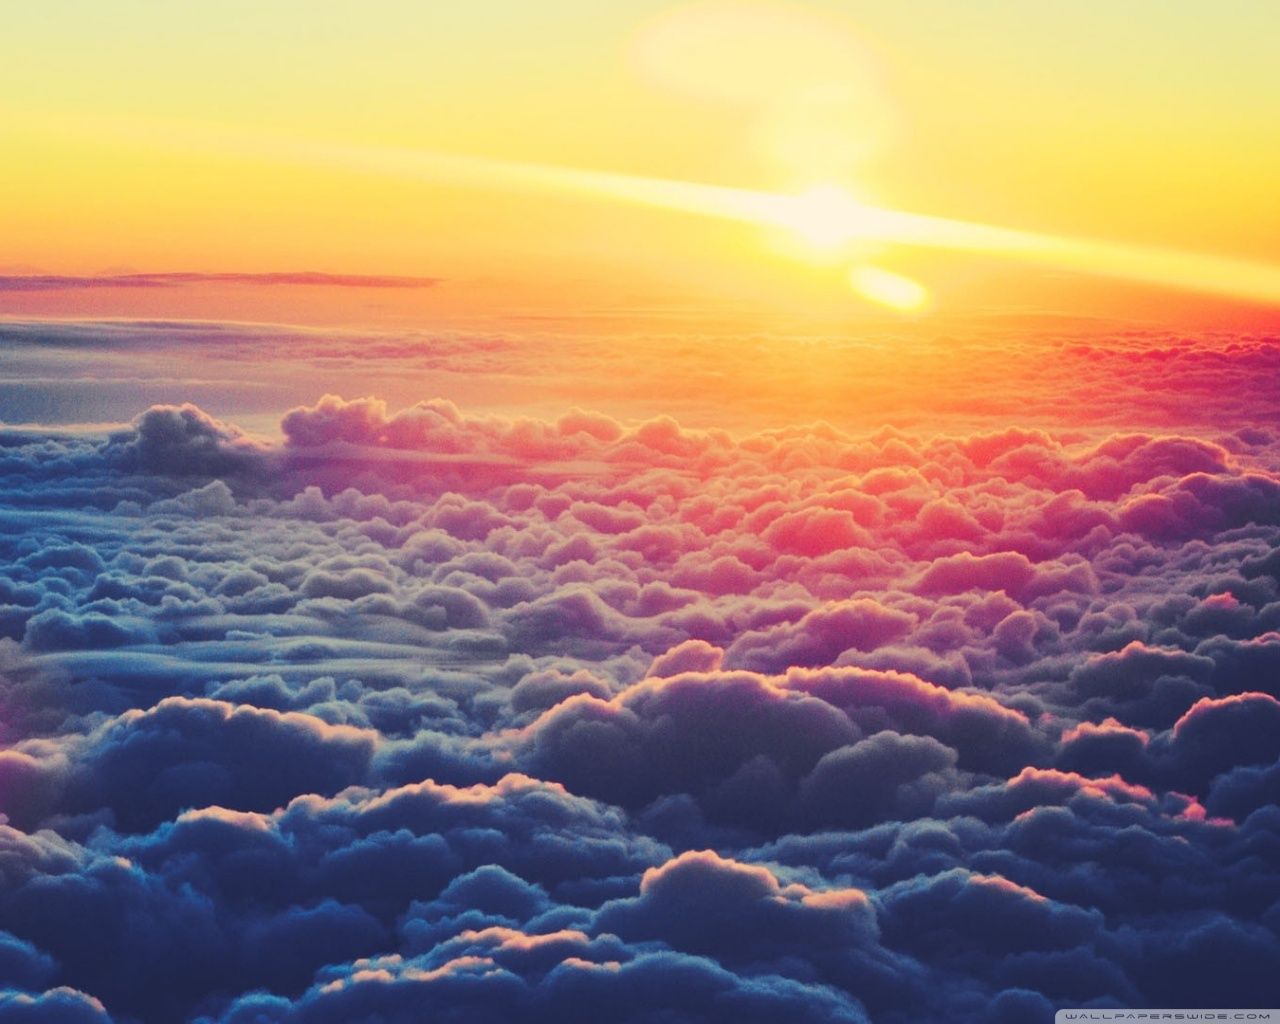 Sunrise Above The Clouds ❤ 4k Hd Desktop Wallpaper - Facebook Cover Photos  Clouds - 1280x1024 Wallpaper 